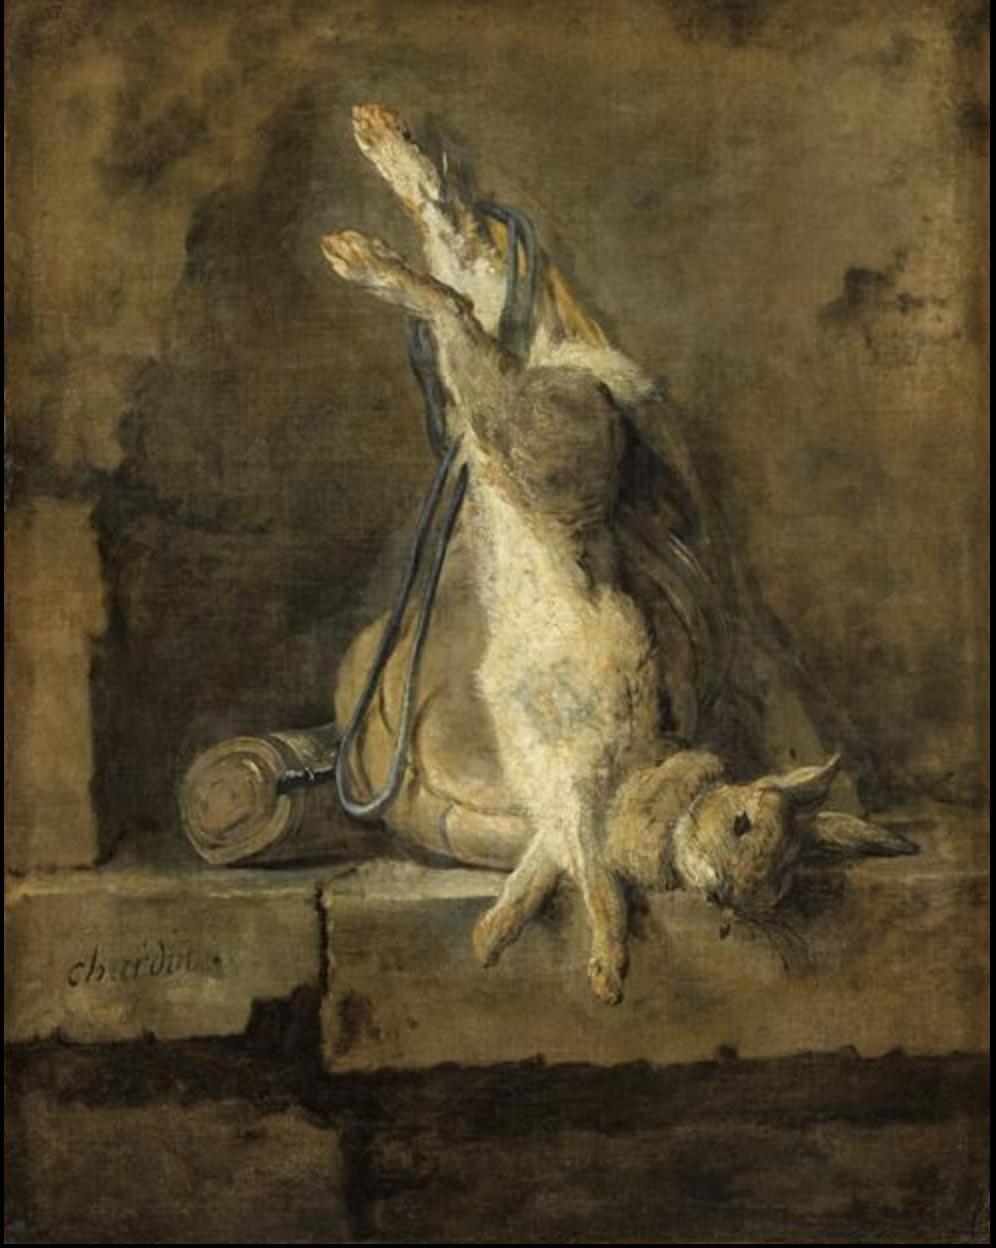 Dead Rabbit and Hunting Gear, Jean-Baptiste-Siméon Chardin